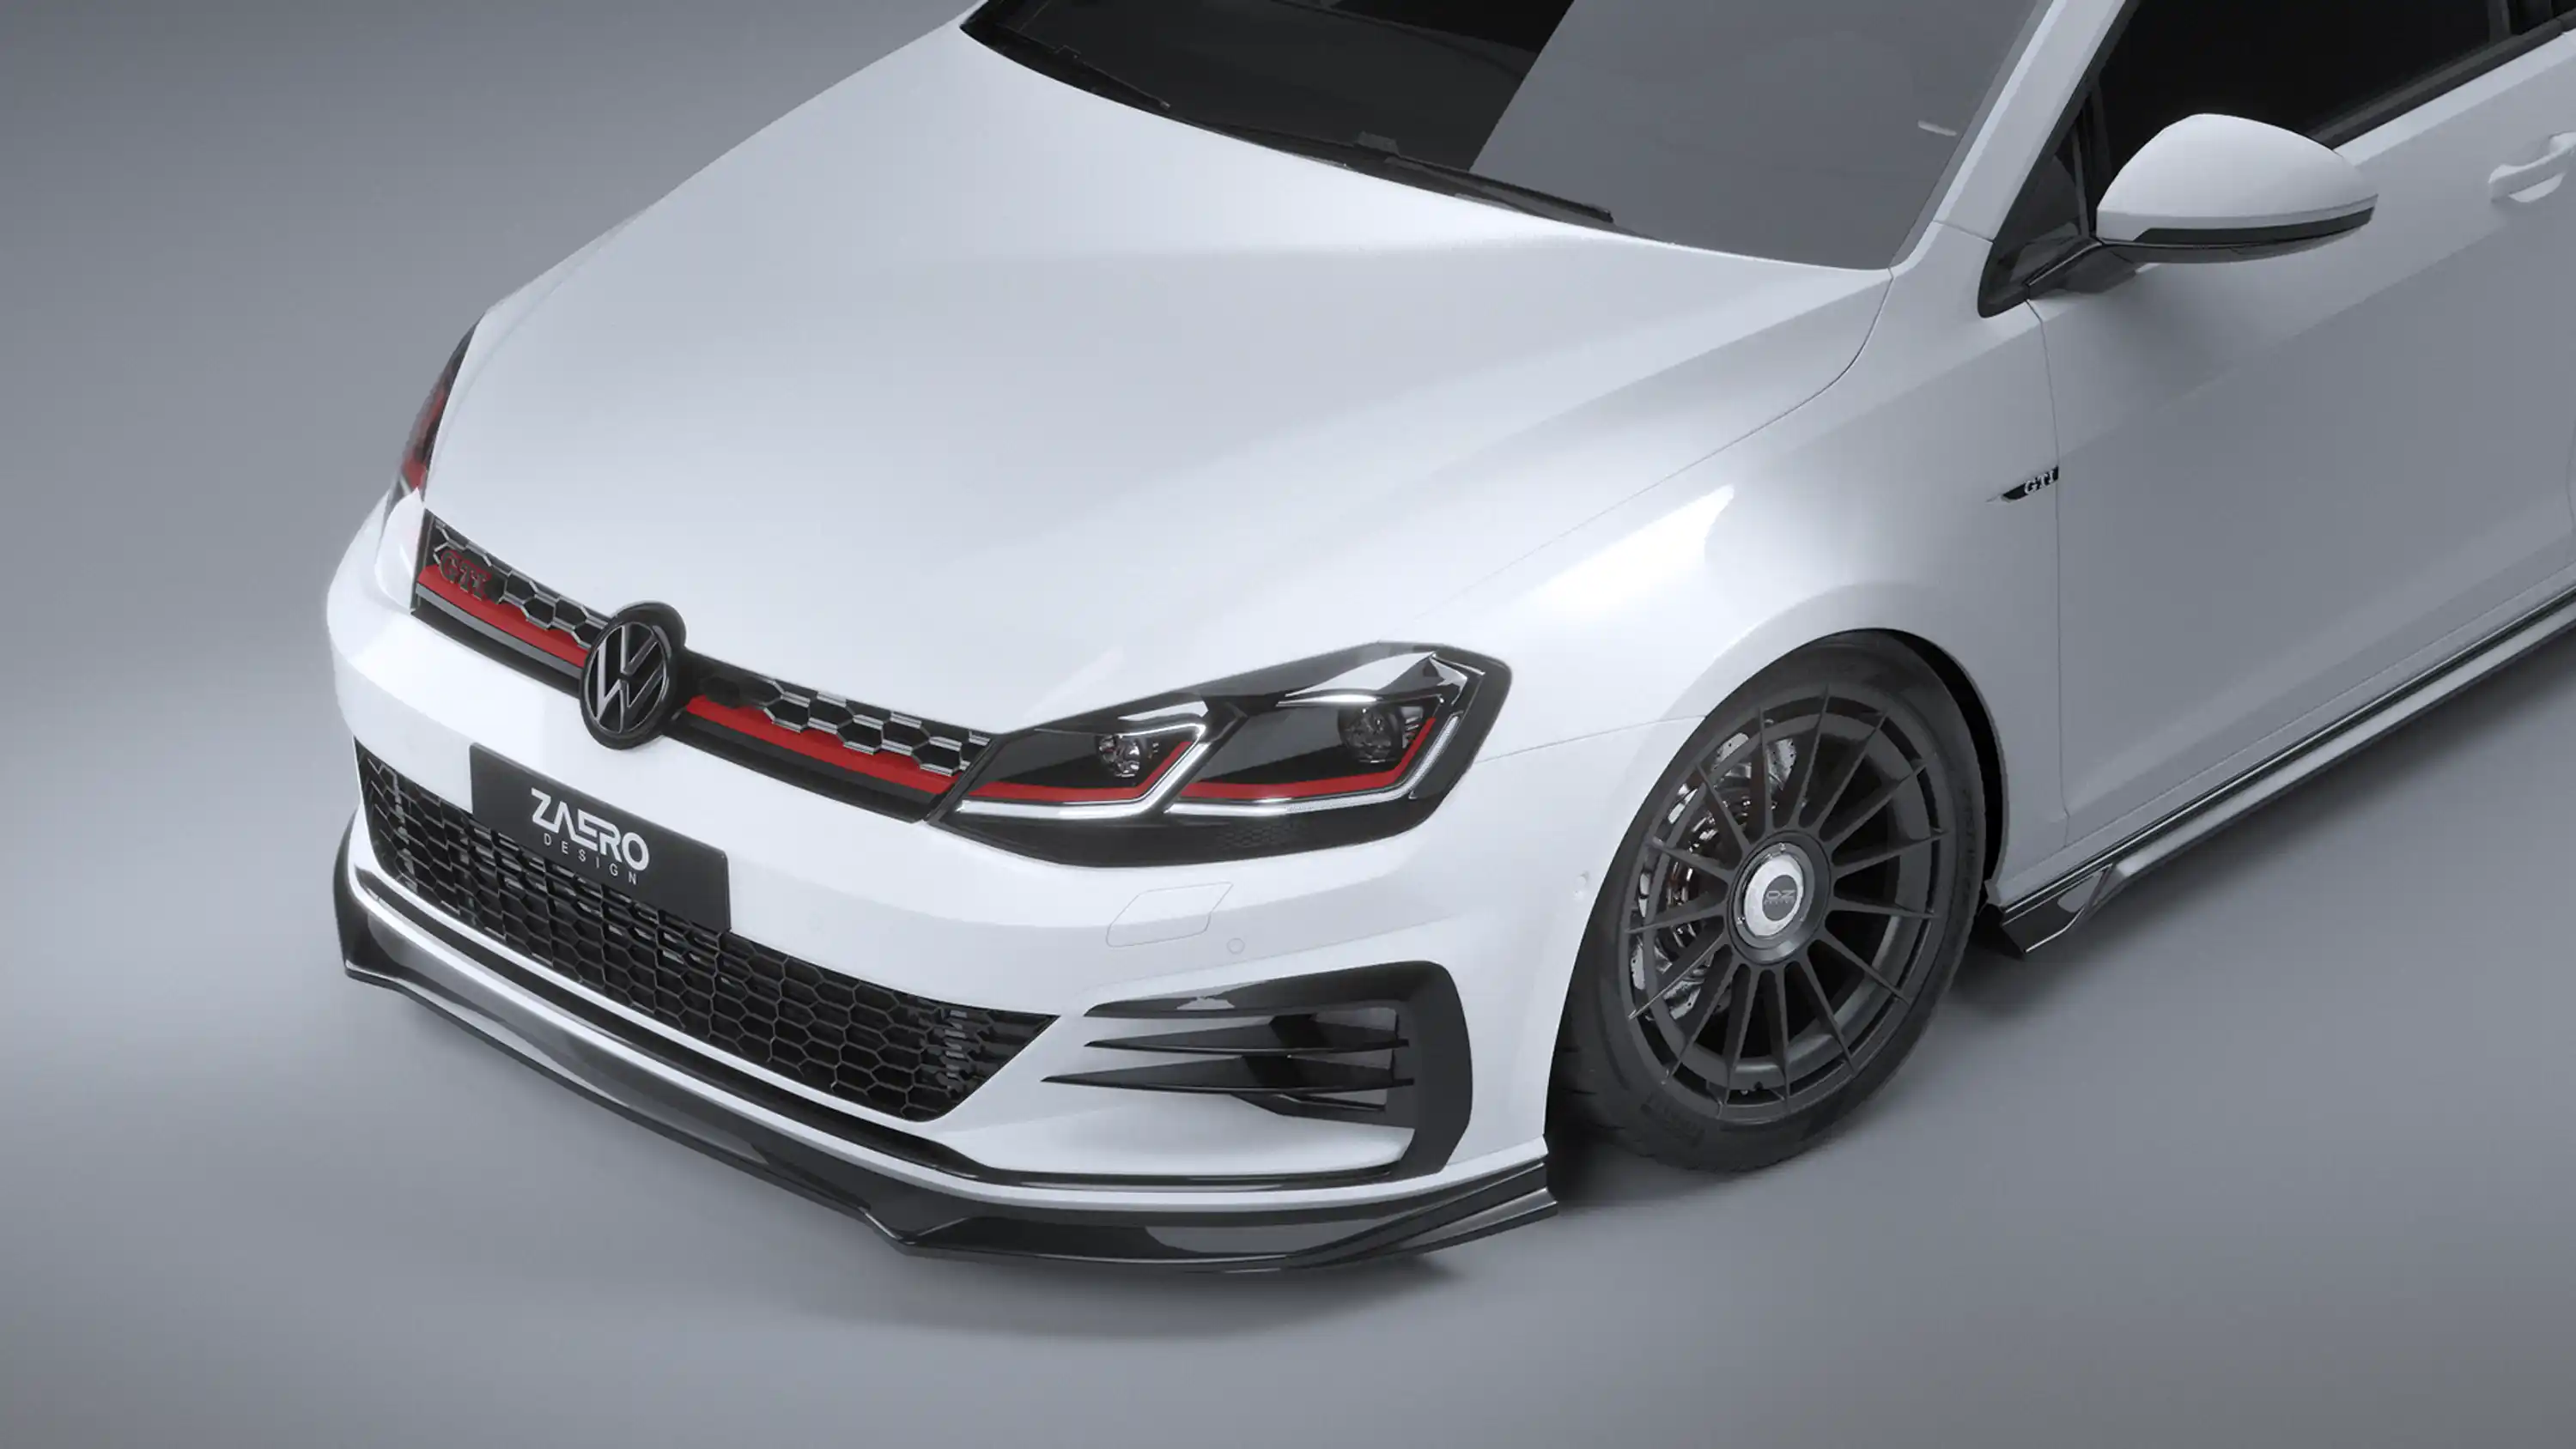 front splitter by ZAERO DESIGN for VW Golf 7.5 GTI (2013 – 2019)